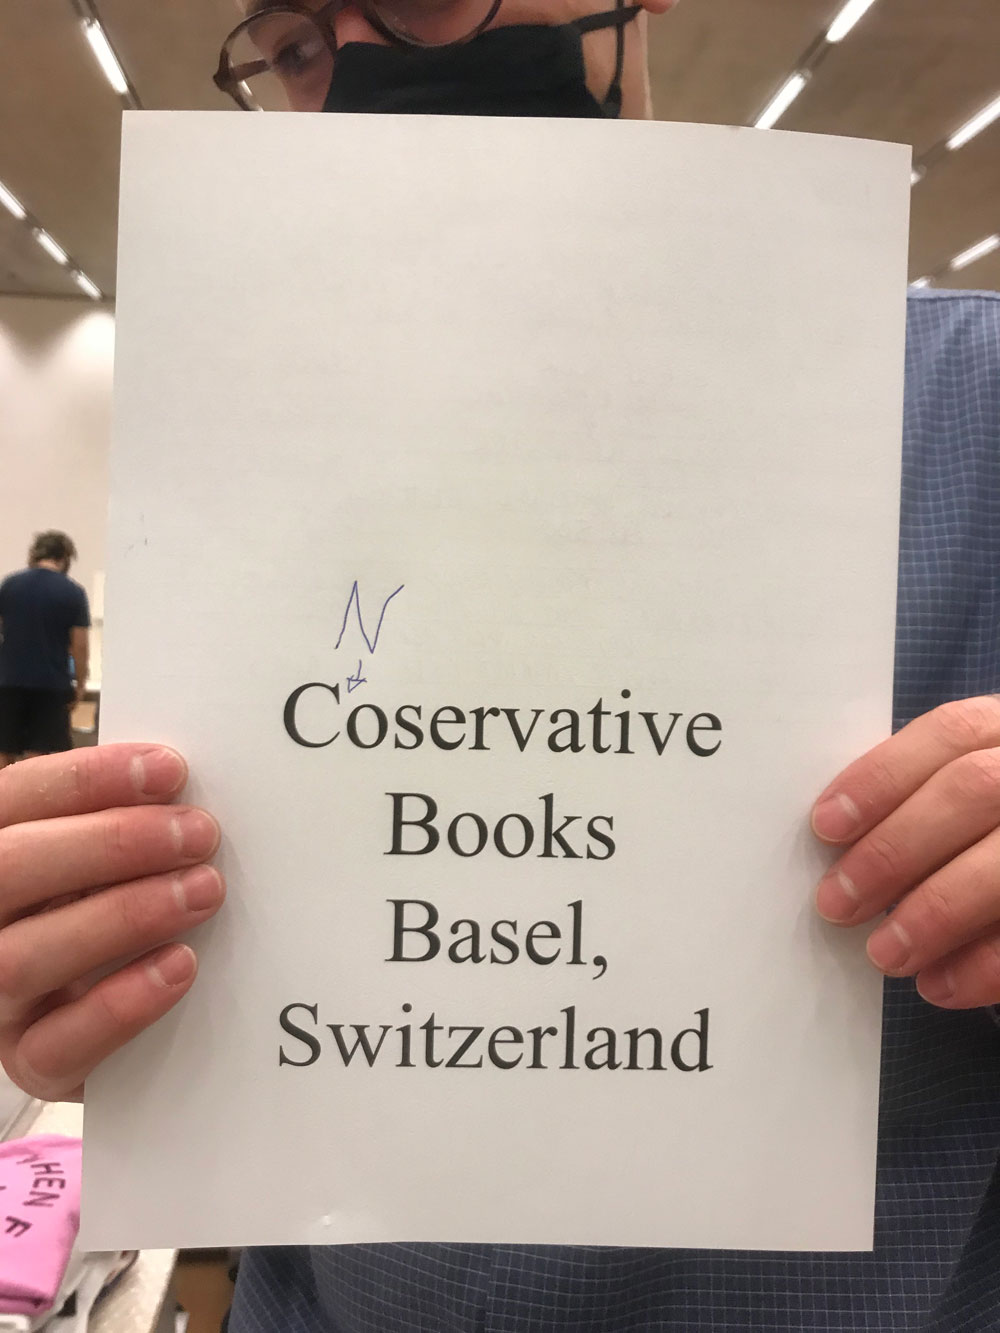 CNoservative Books Basel, Switzerland